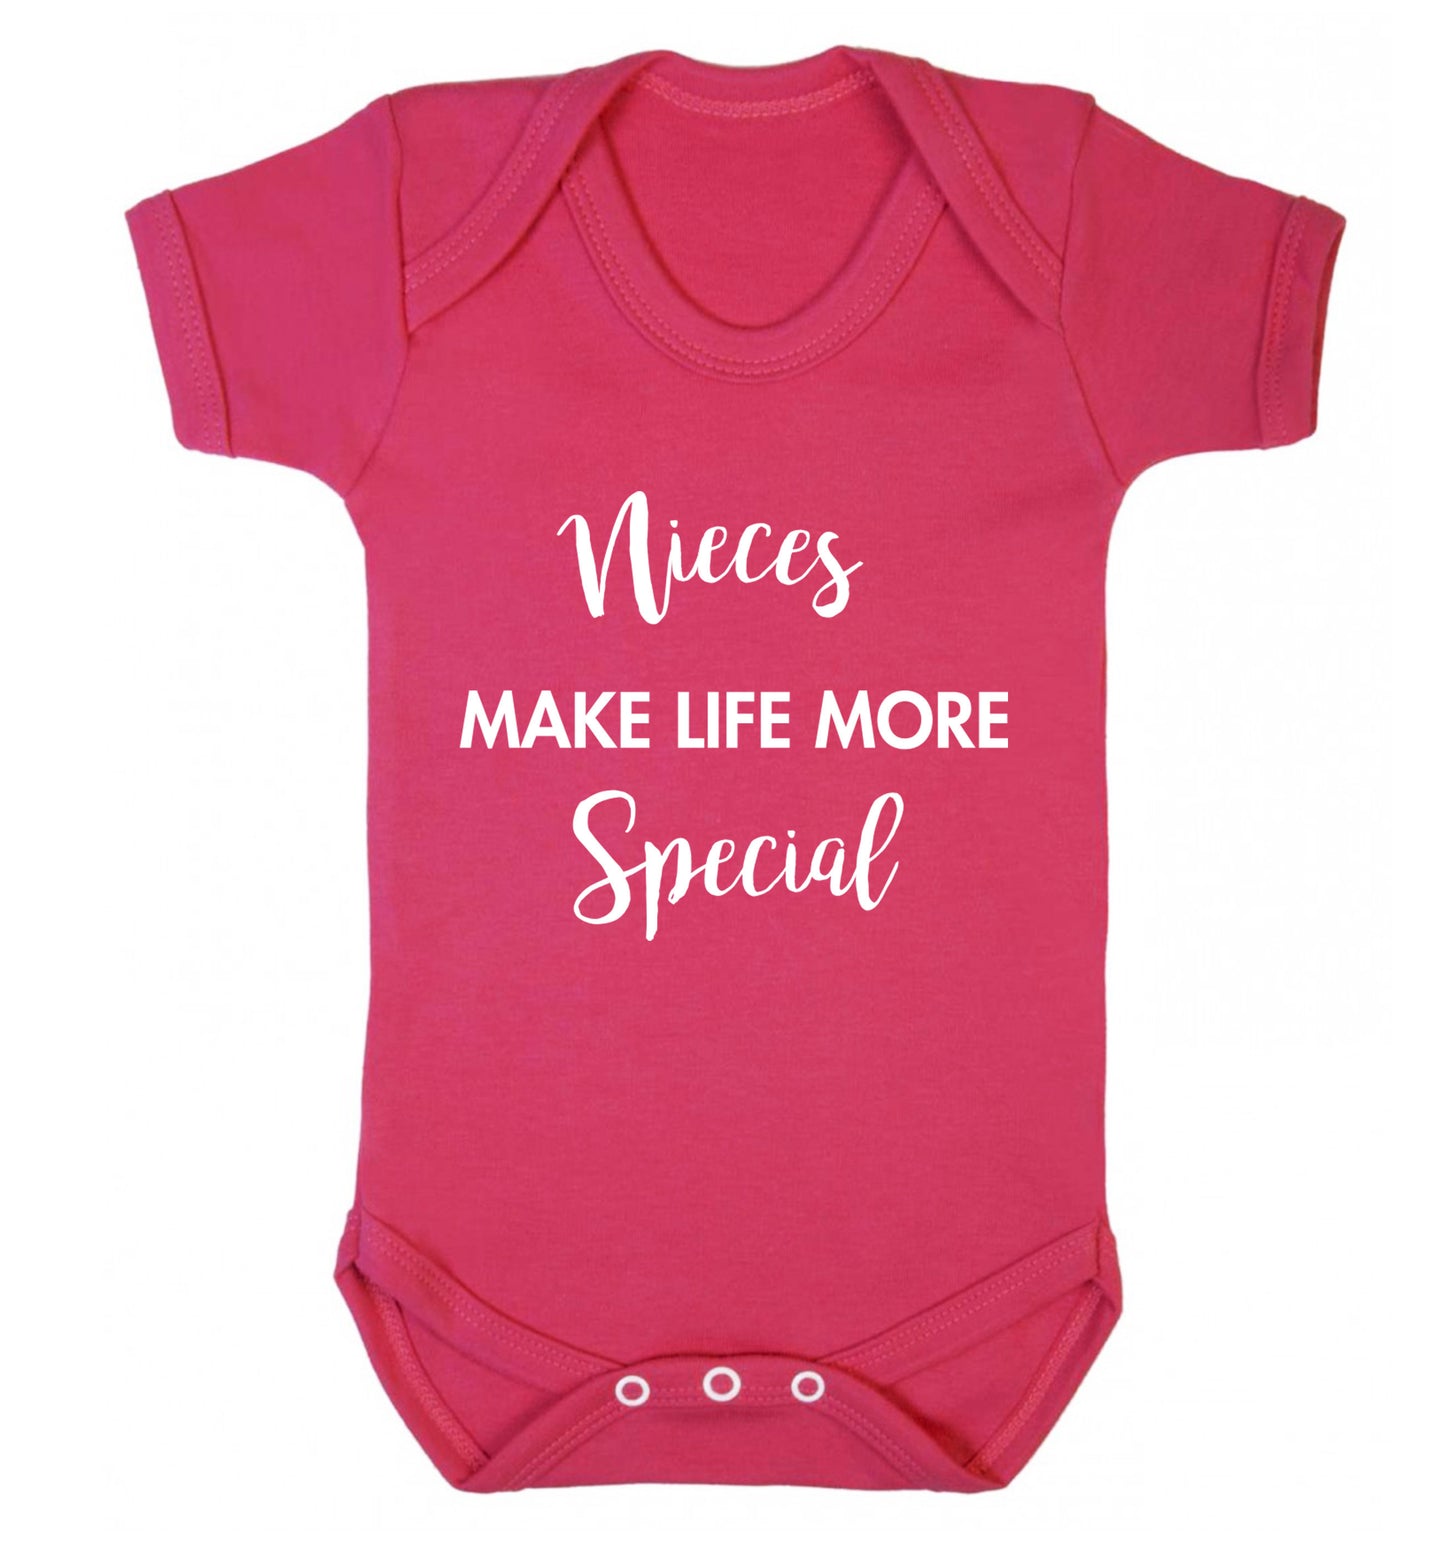 Nieces make life more special Baby Vest dark pink 18-24 months